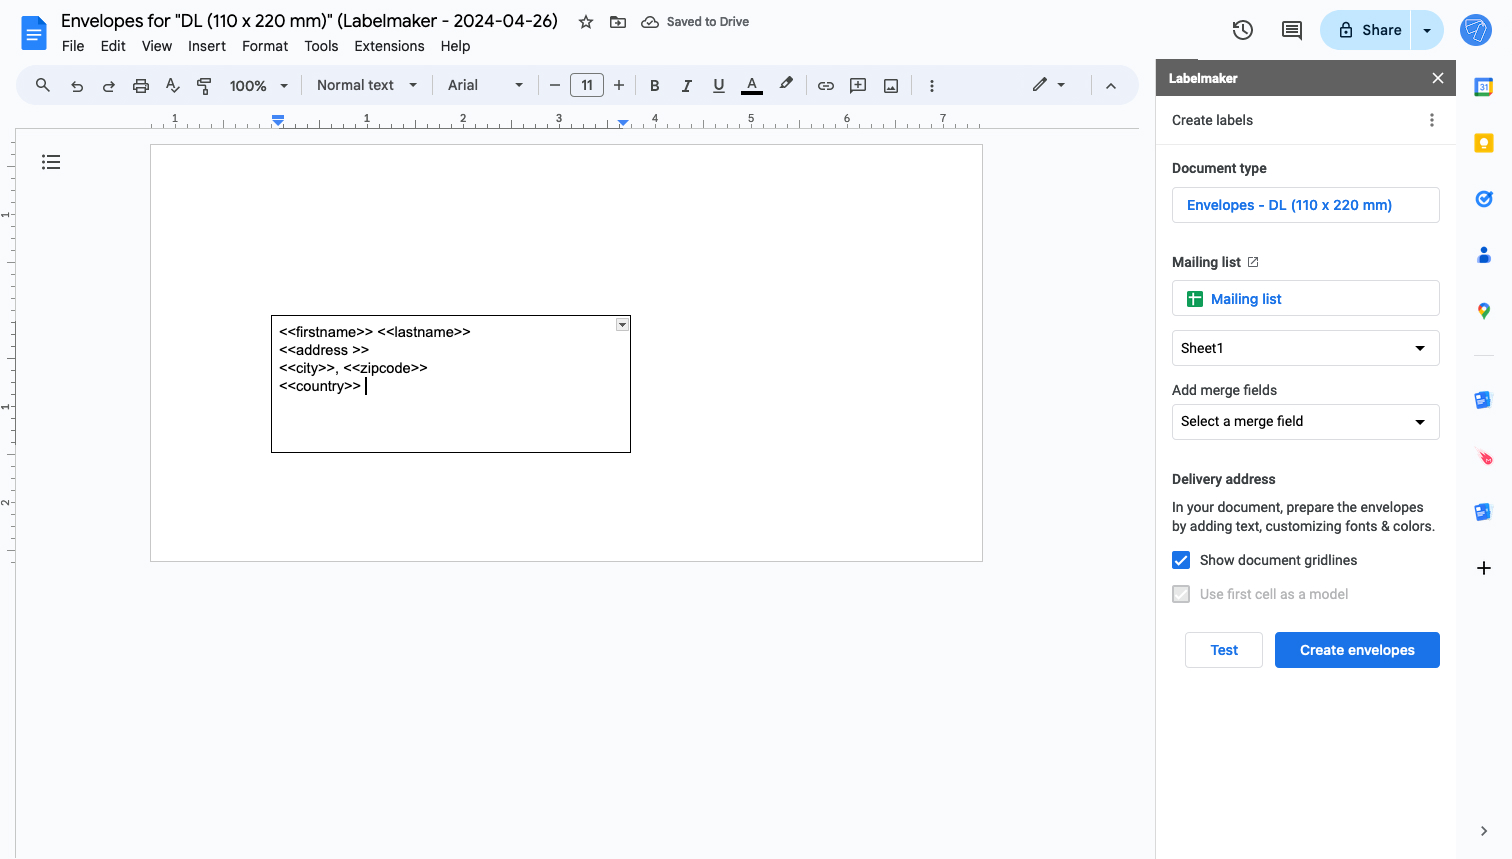 Screenshot of adding merge fields on envelopes in Google Docs